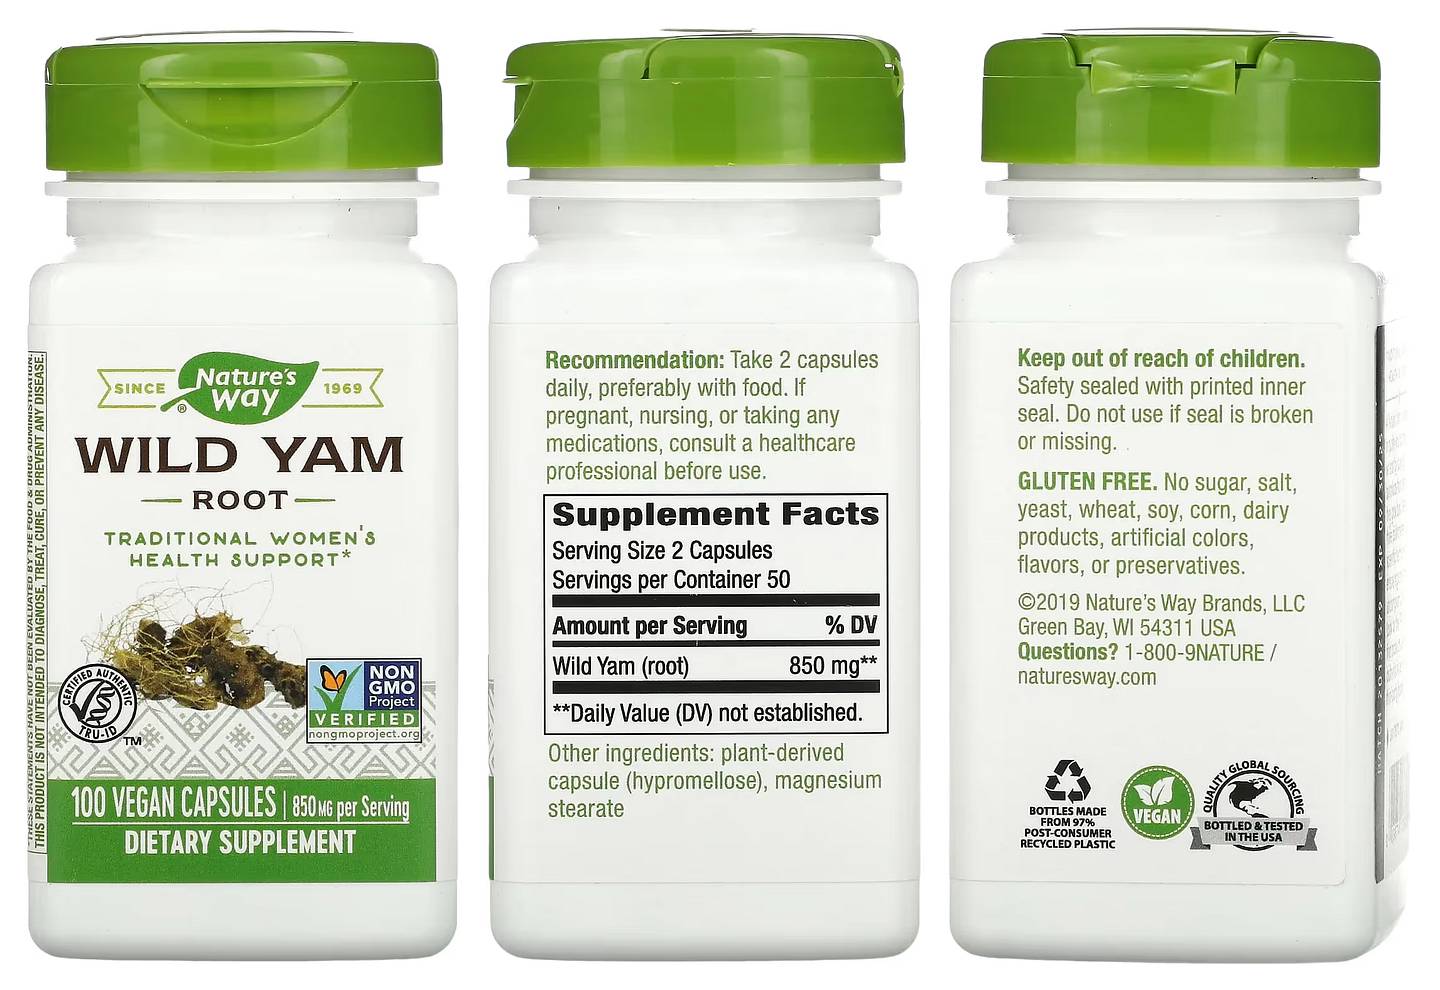 Nature's Way, Wild Yam Root packaging